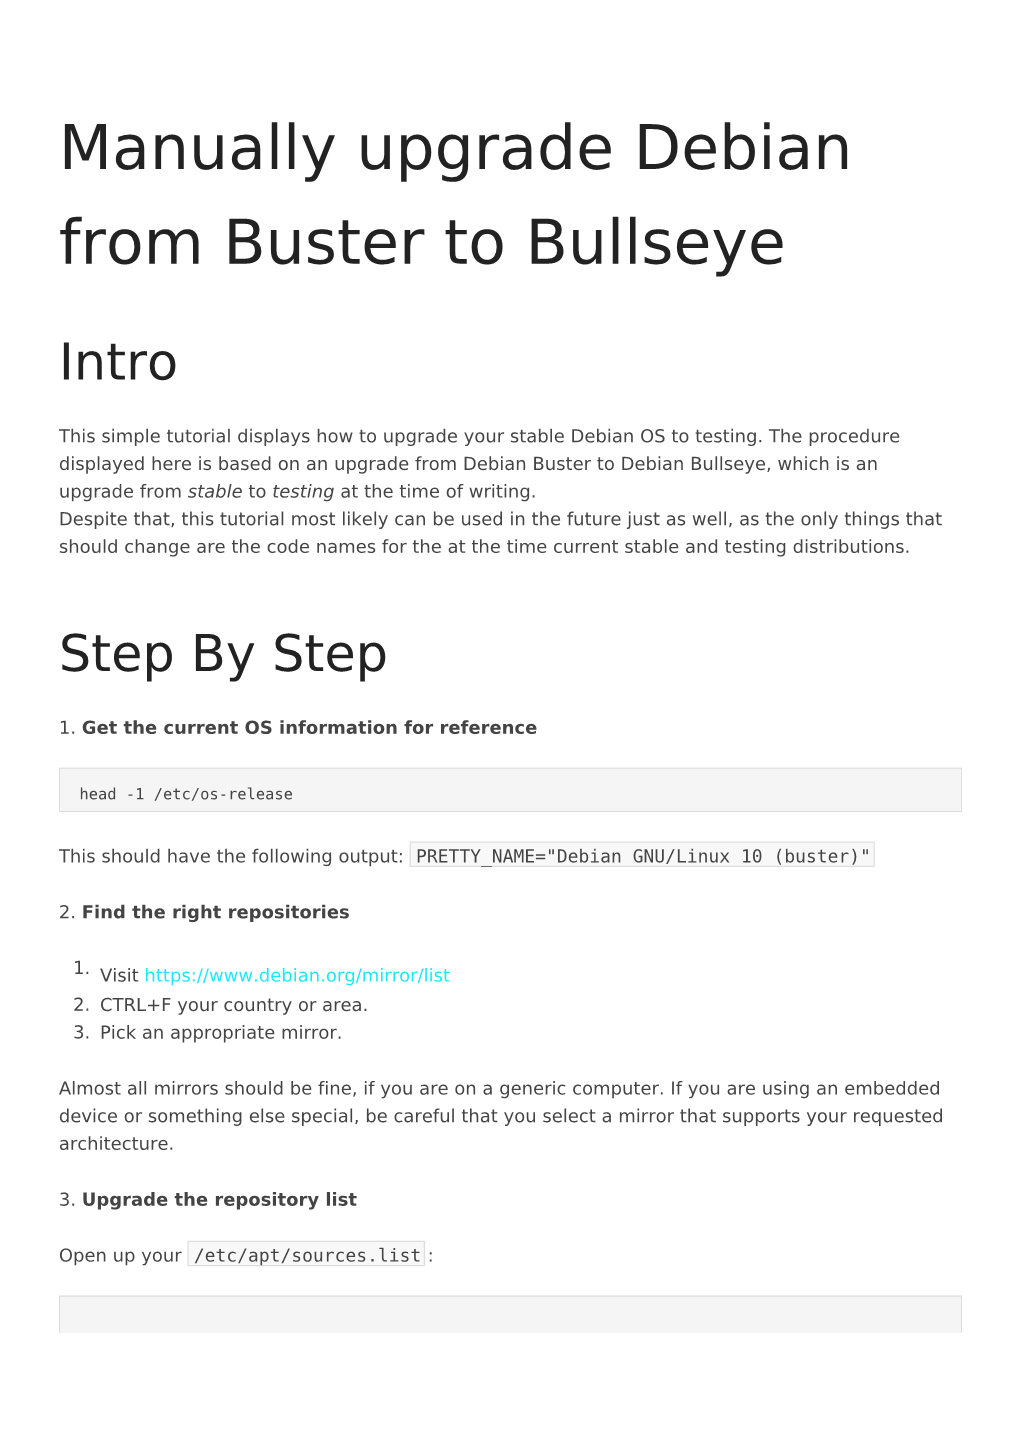 Manually Upgrade Debian from Buster to Bullseye